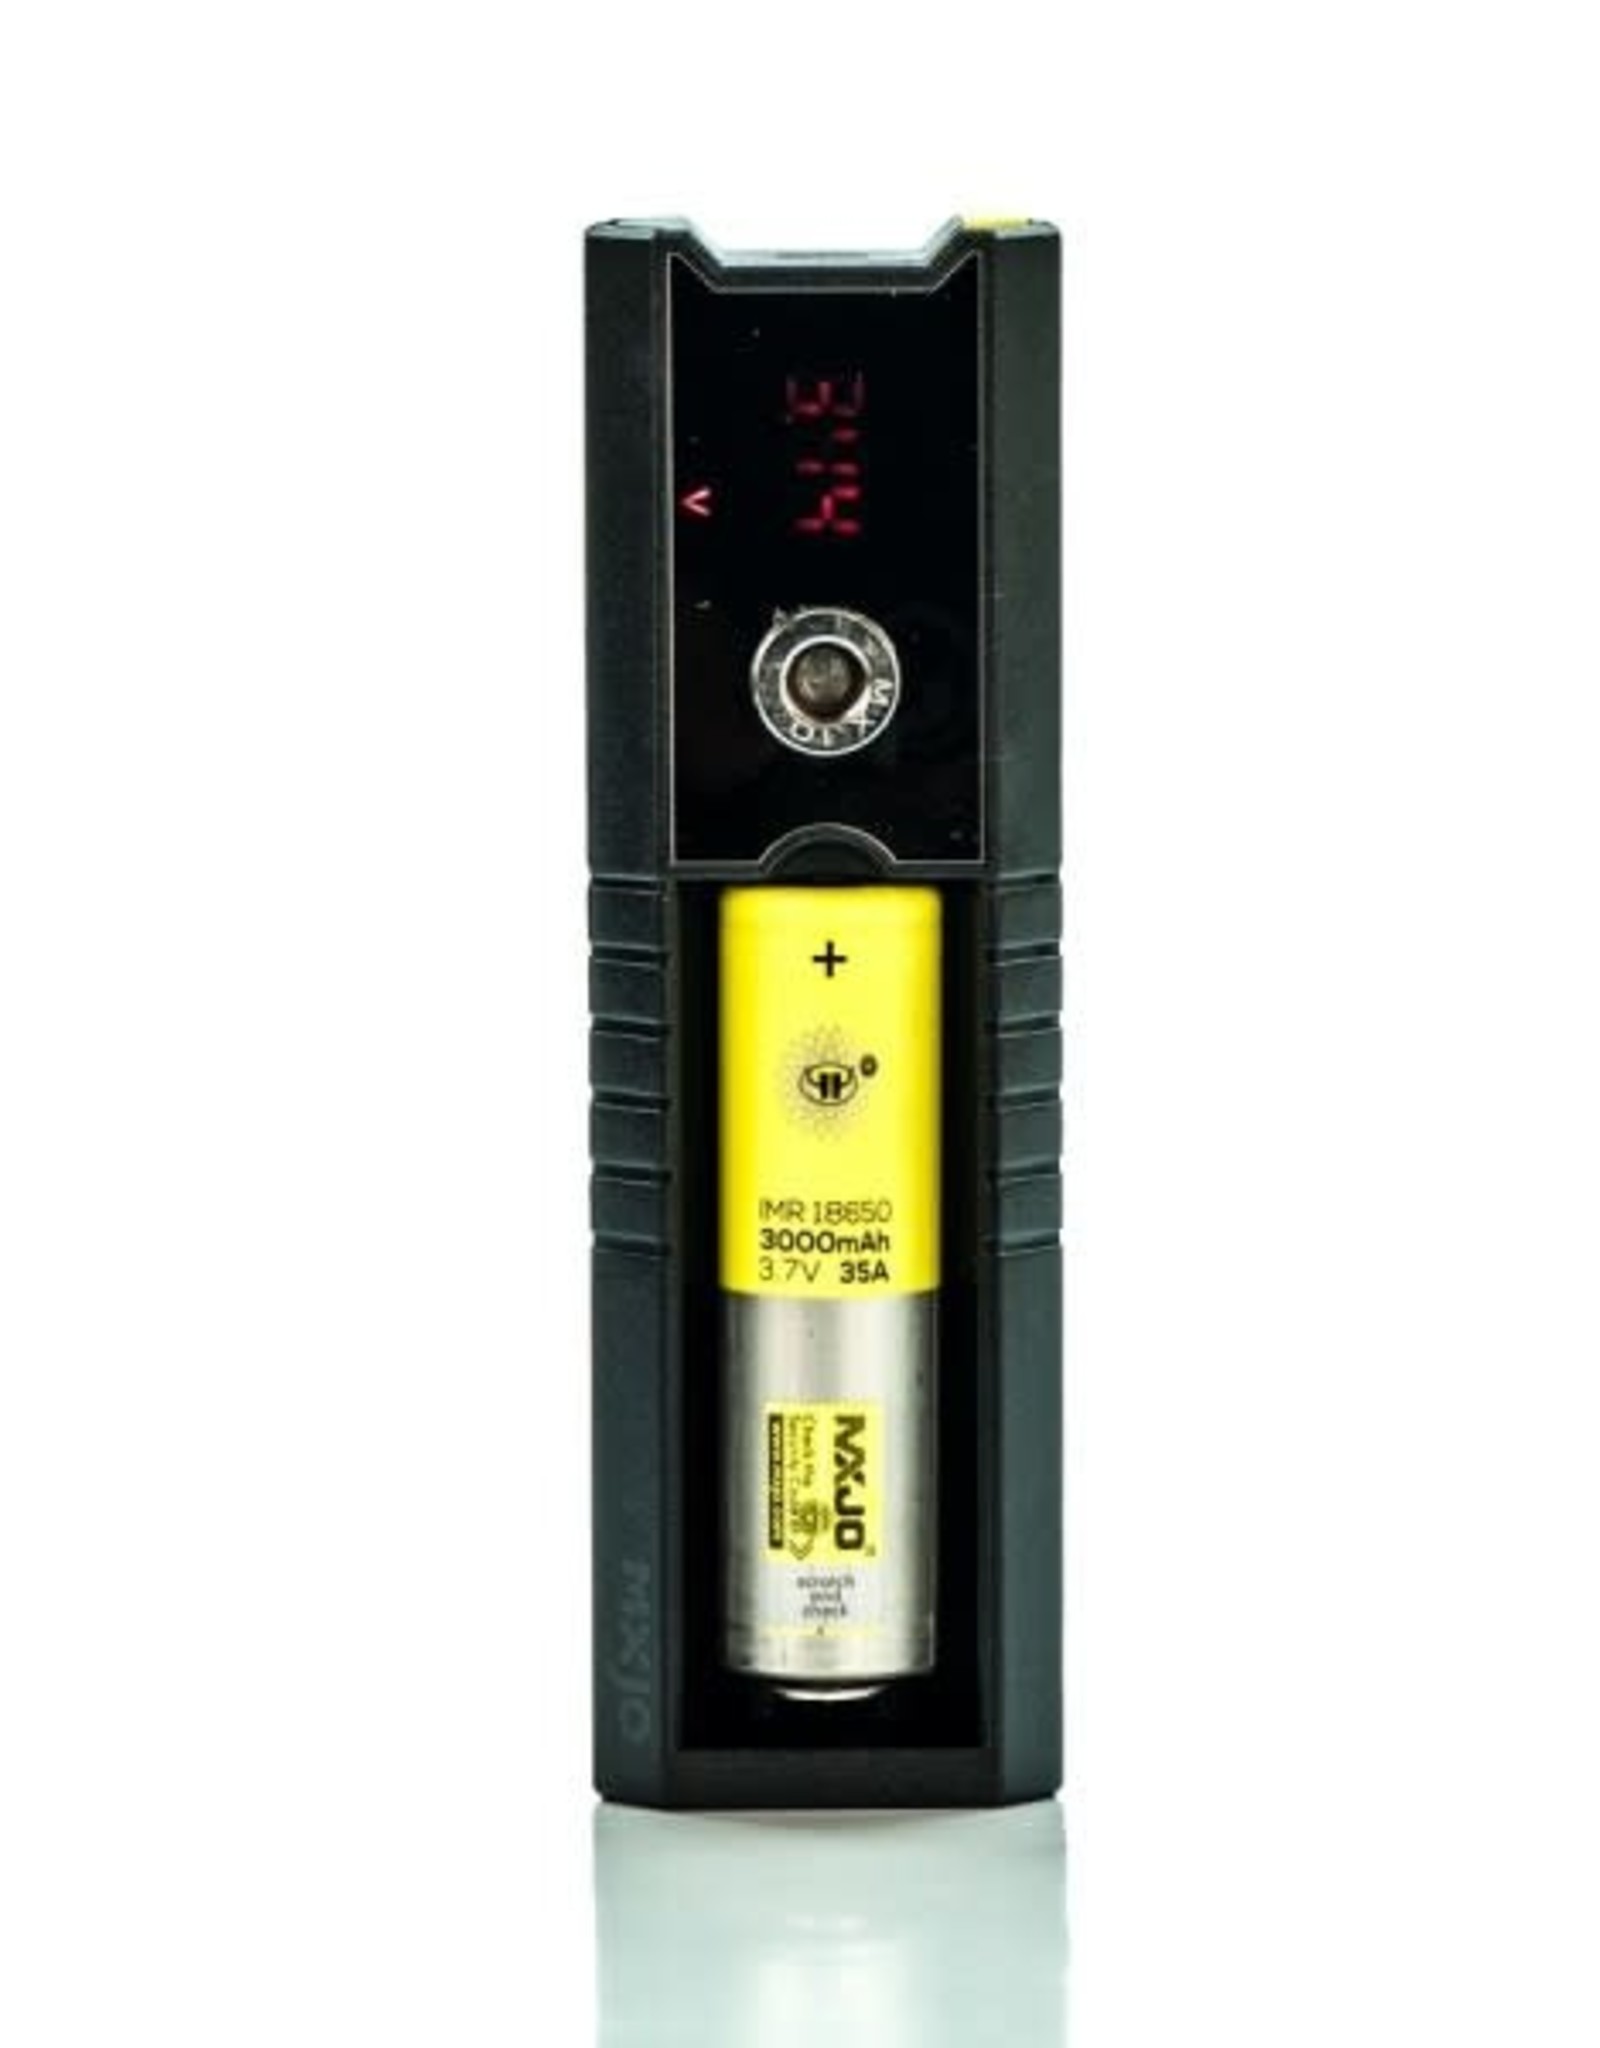 Chargeur Voltmètre Ohmmètre OC Mini MXJO - Nicovip